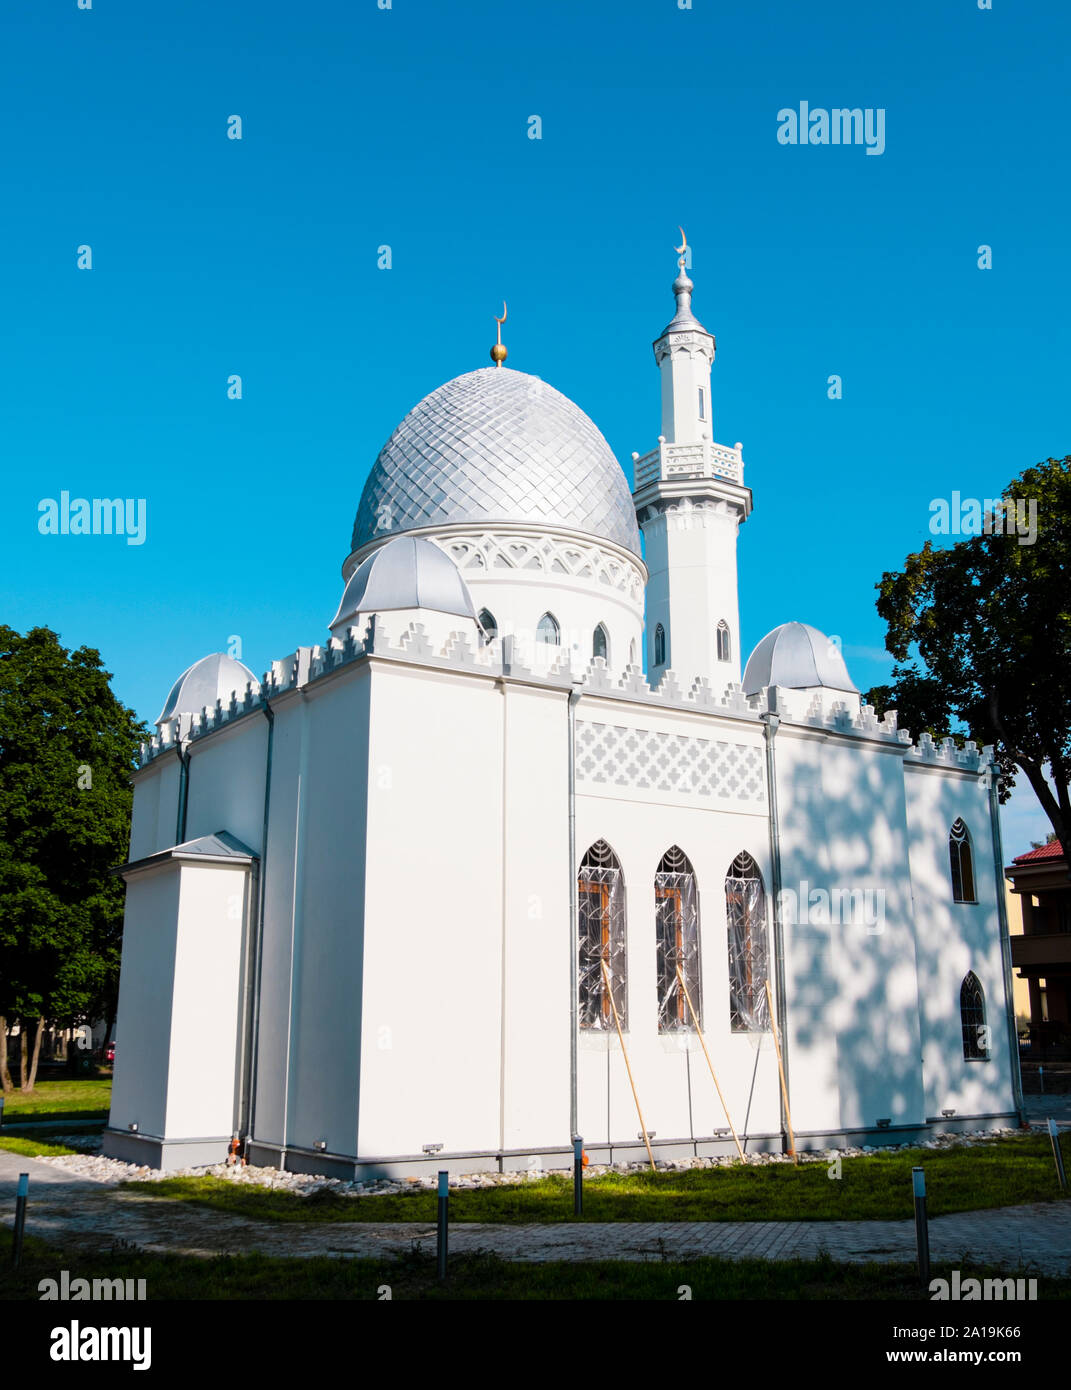 Kauno Mecete, Kaunas Mosque, from 2019, Ramybes Park, Kaunas, Lithuania Stock Photo